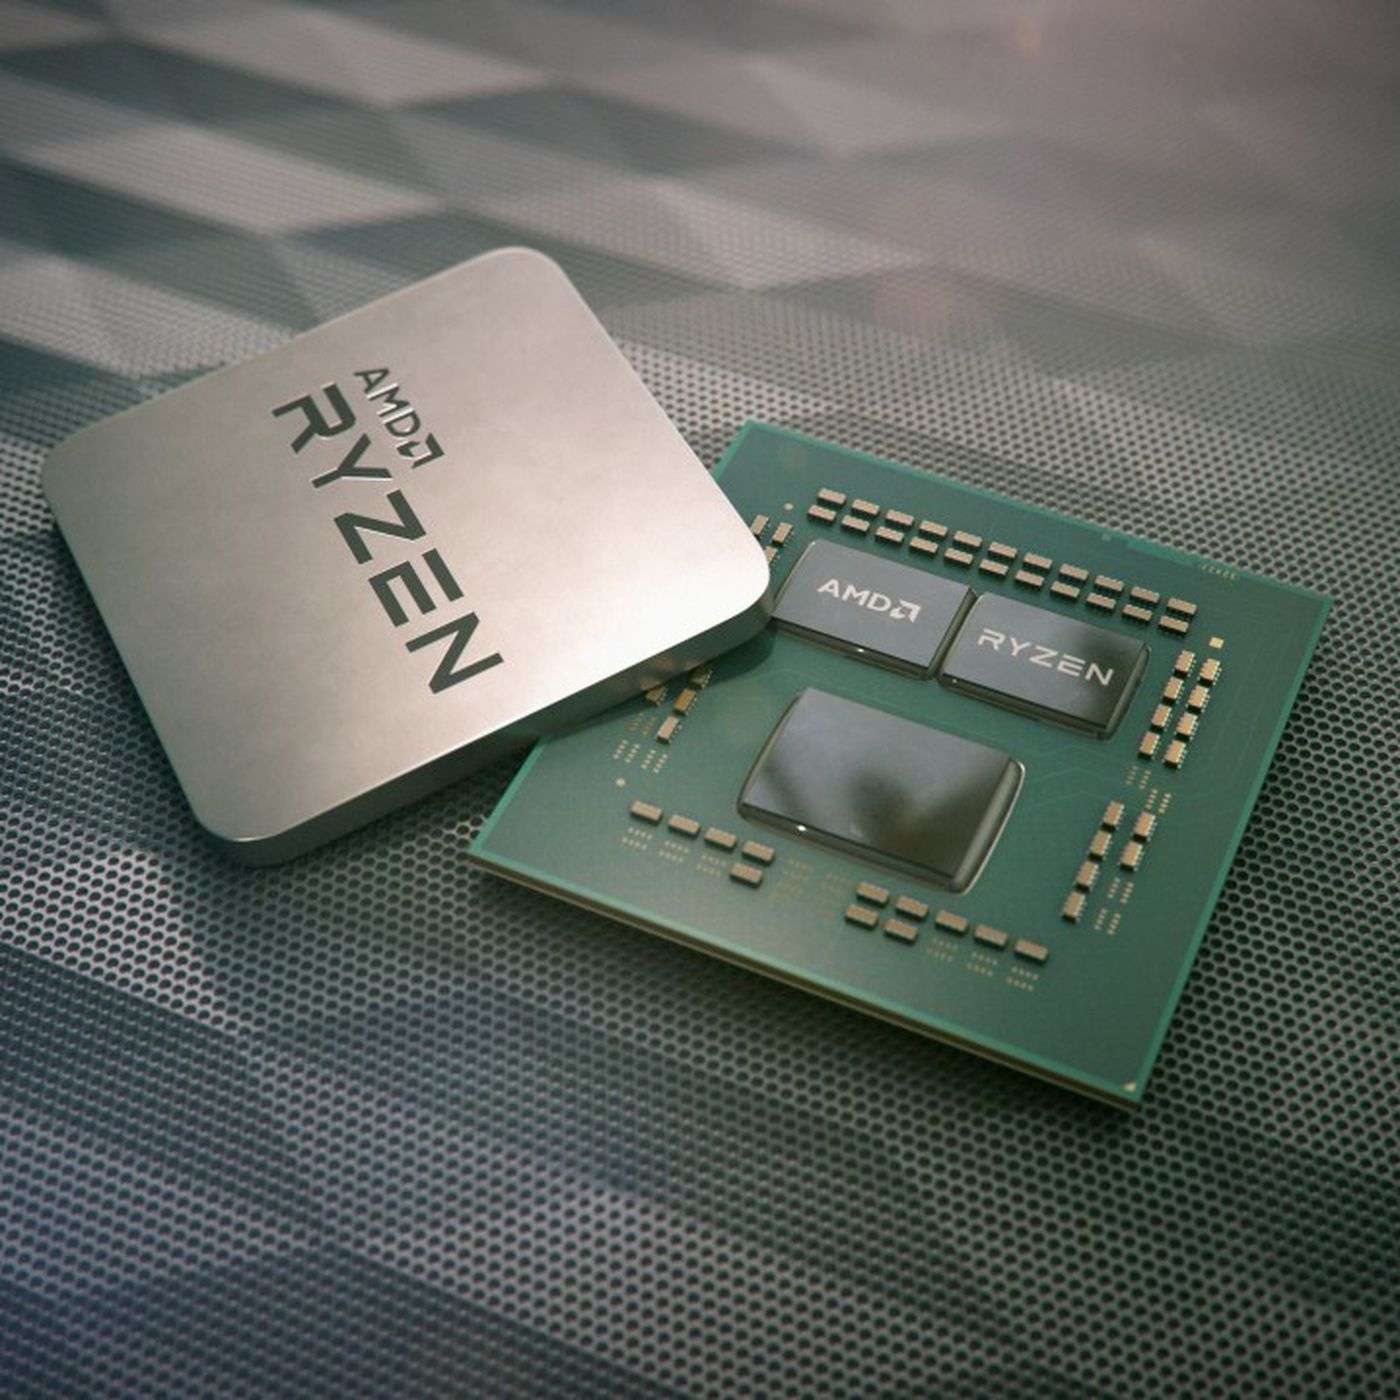 AMD Ryzen launches new processors